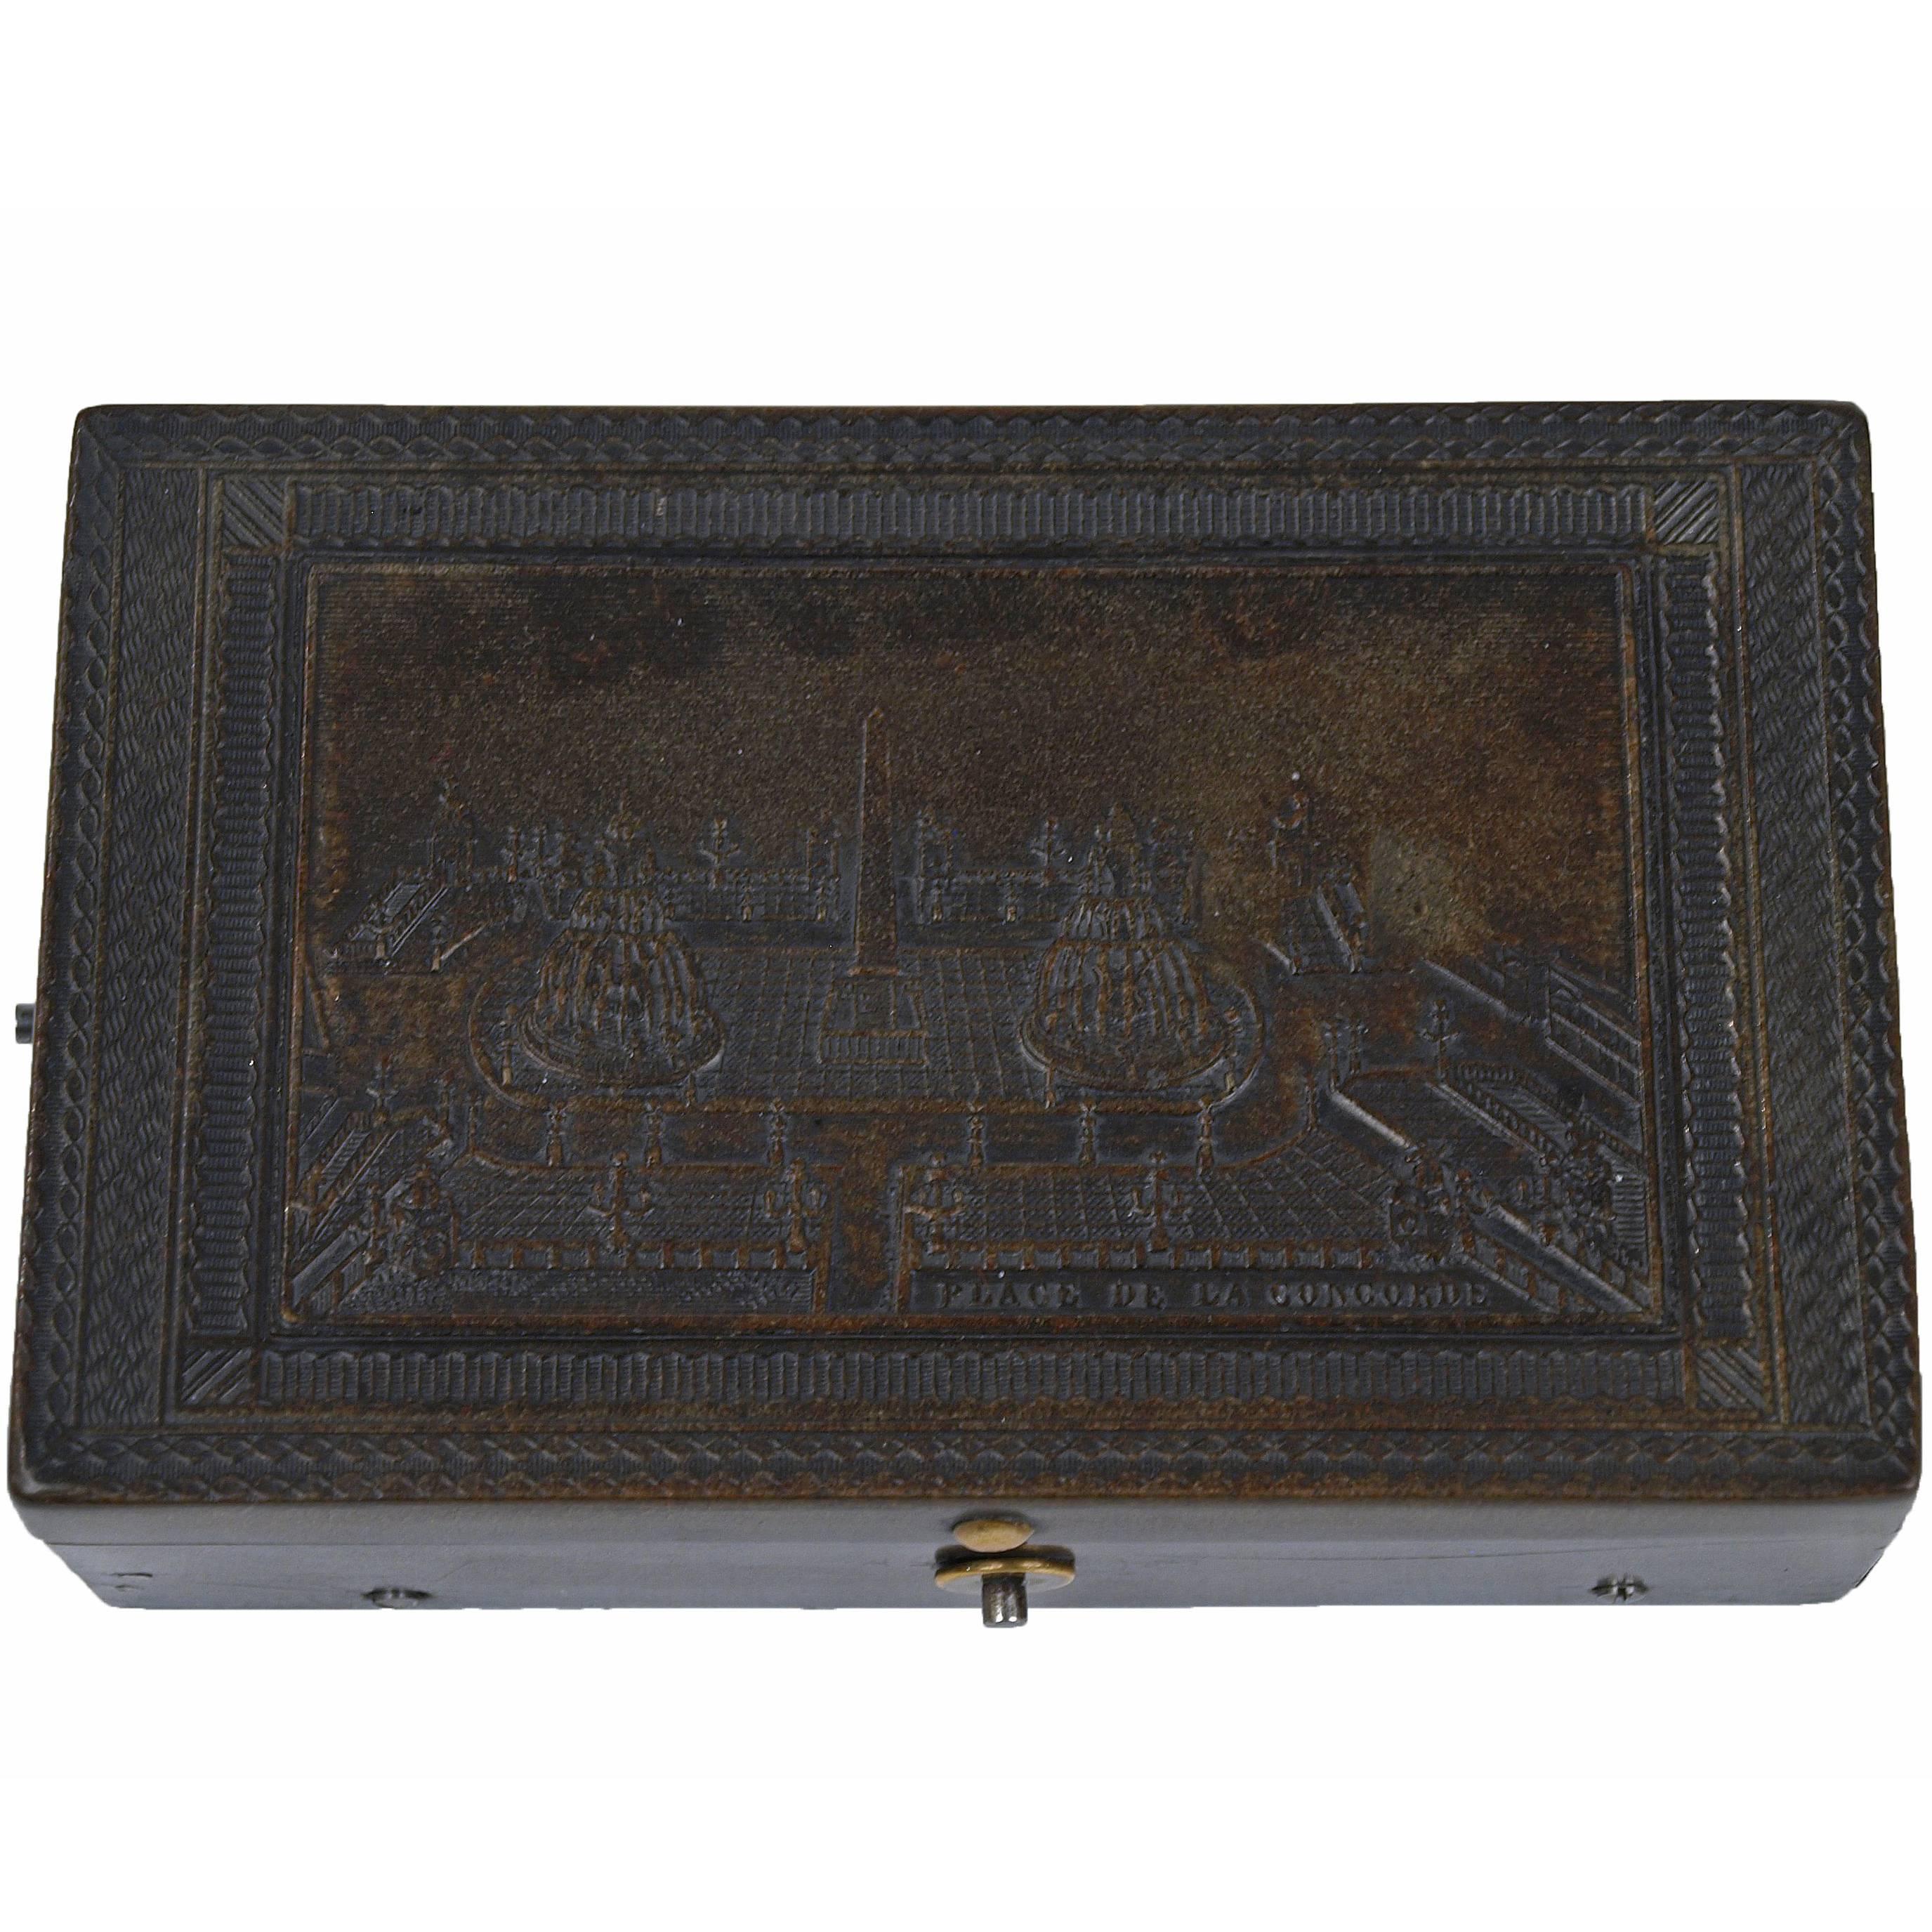 Engraved Tortoiseshell Music Box with French Revolutionary Inscription